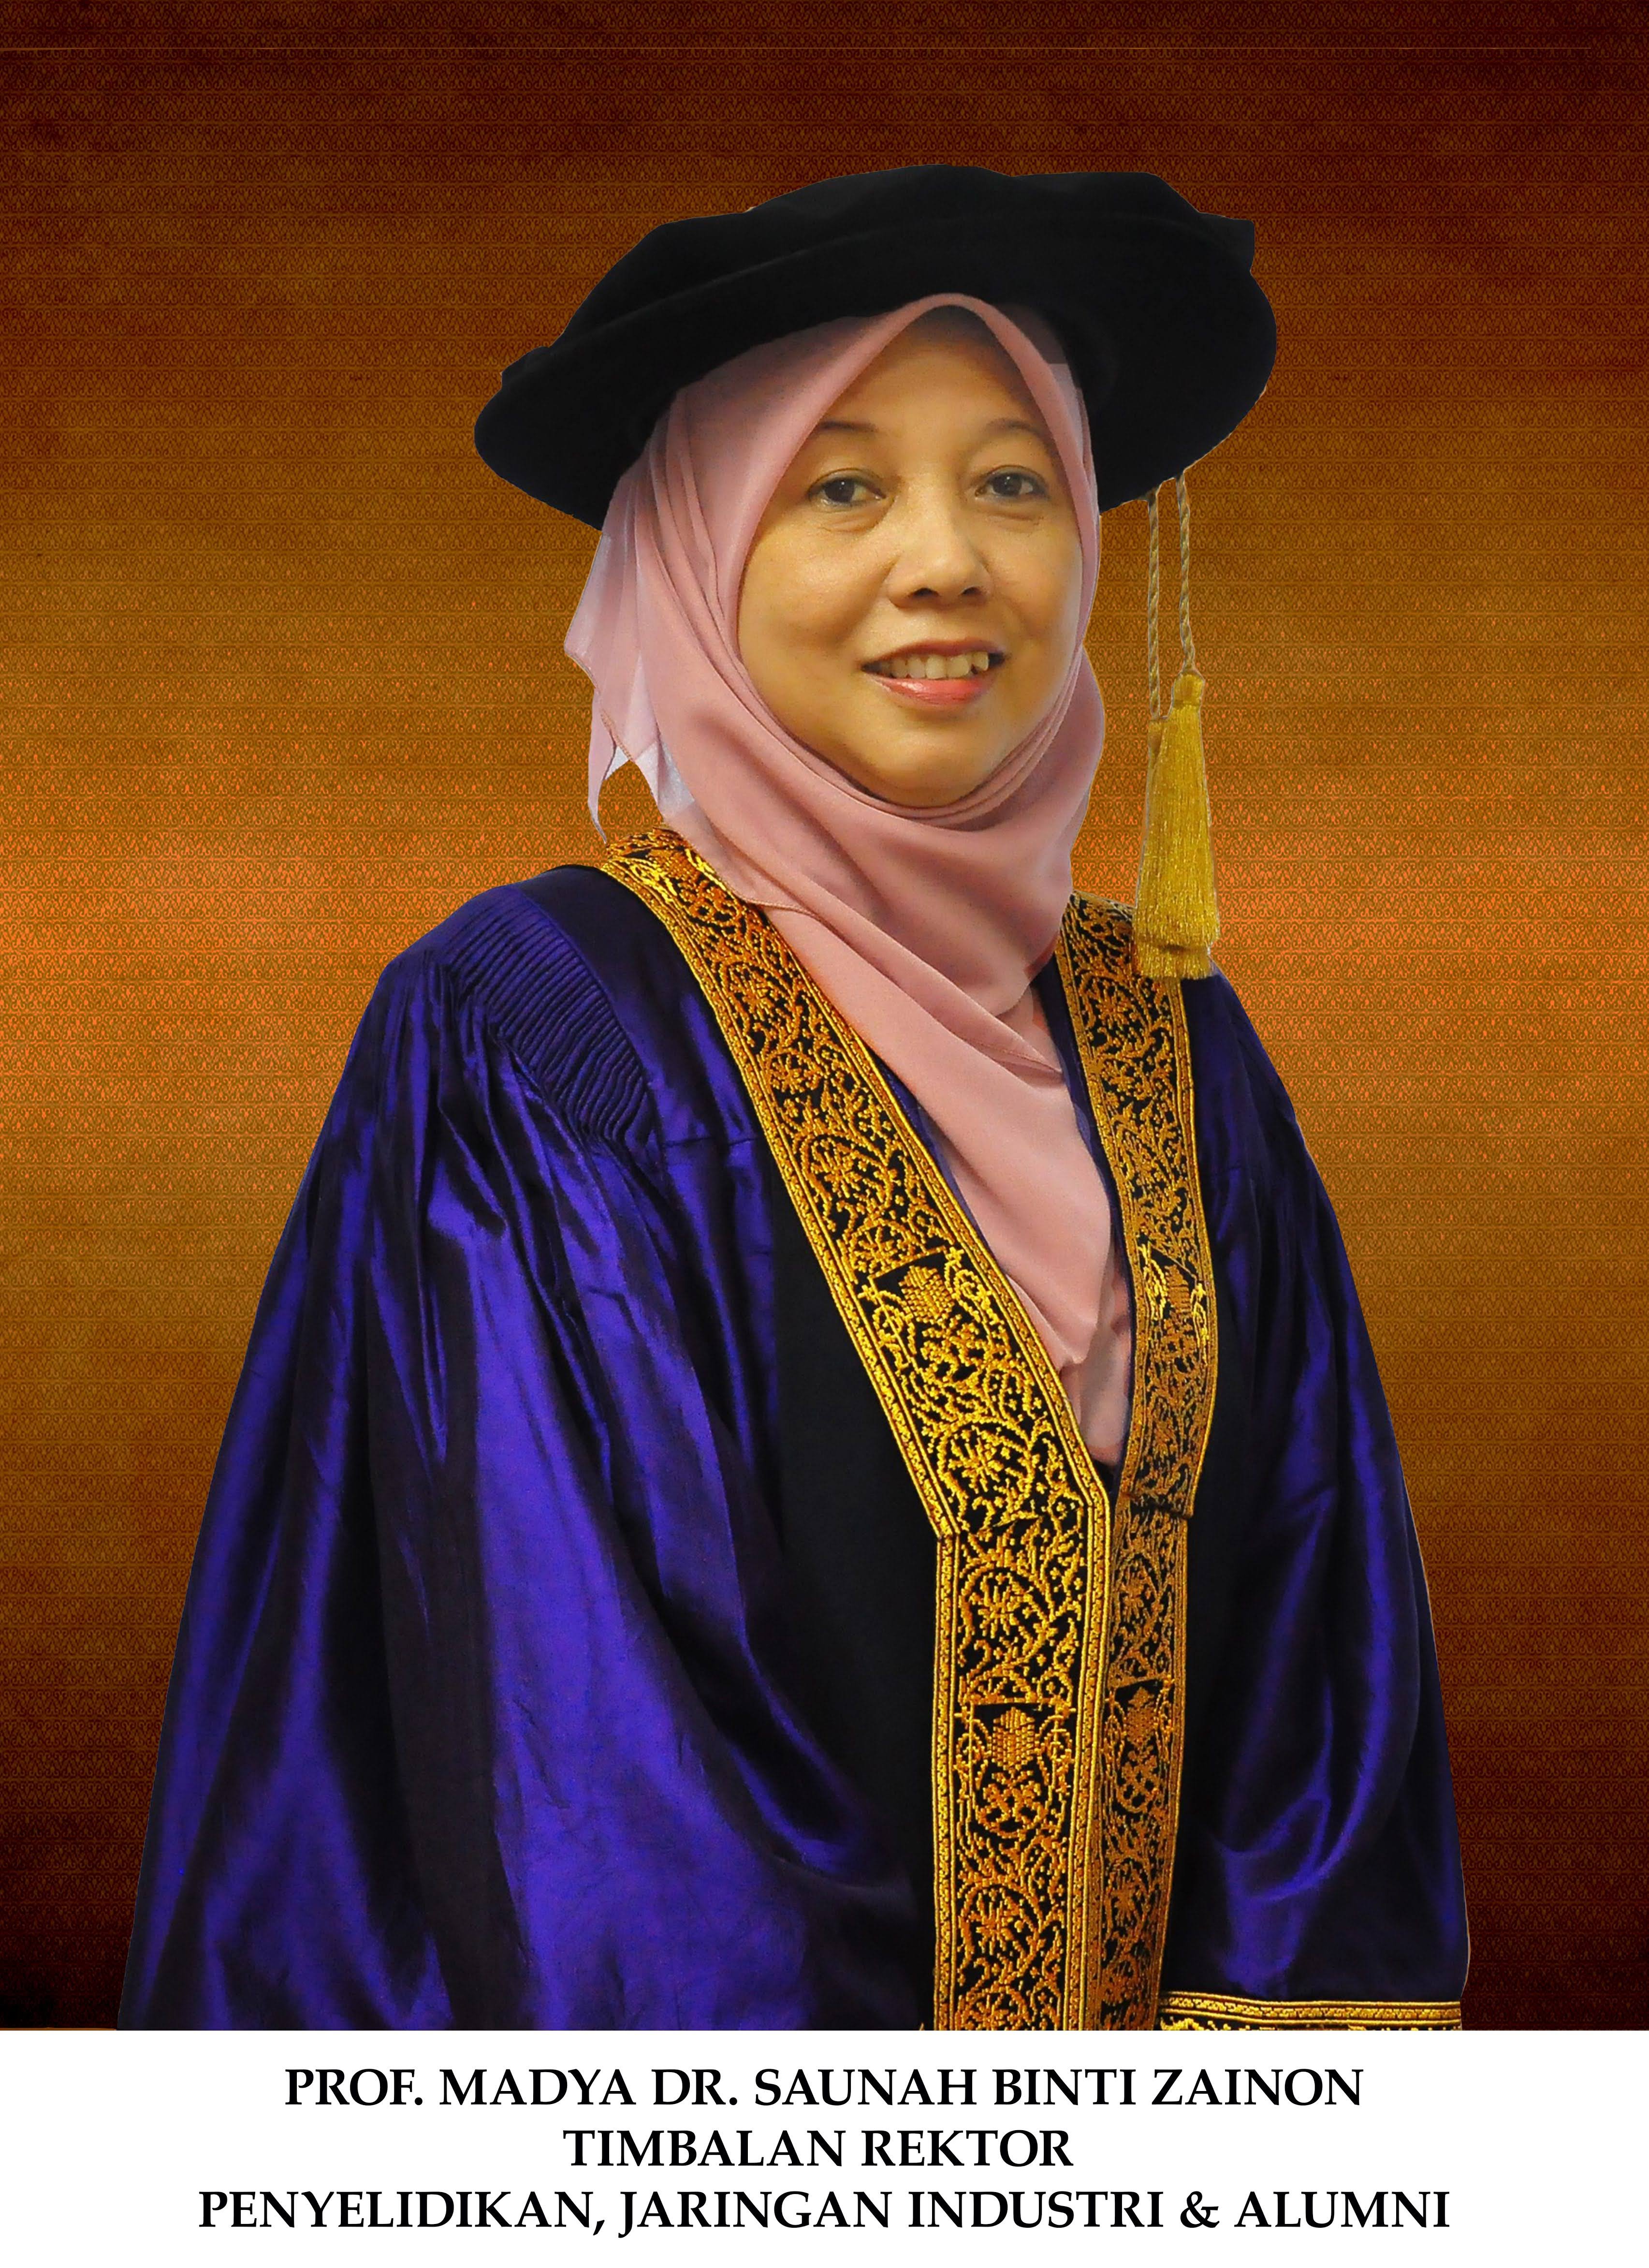 Prof. Madya Dr. Saunah Zainon